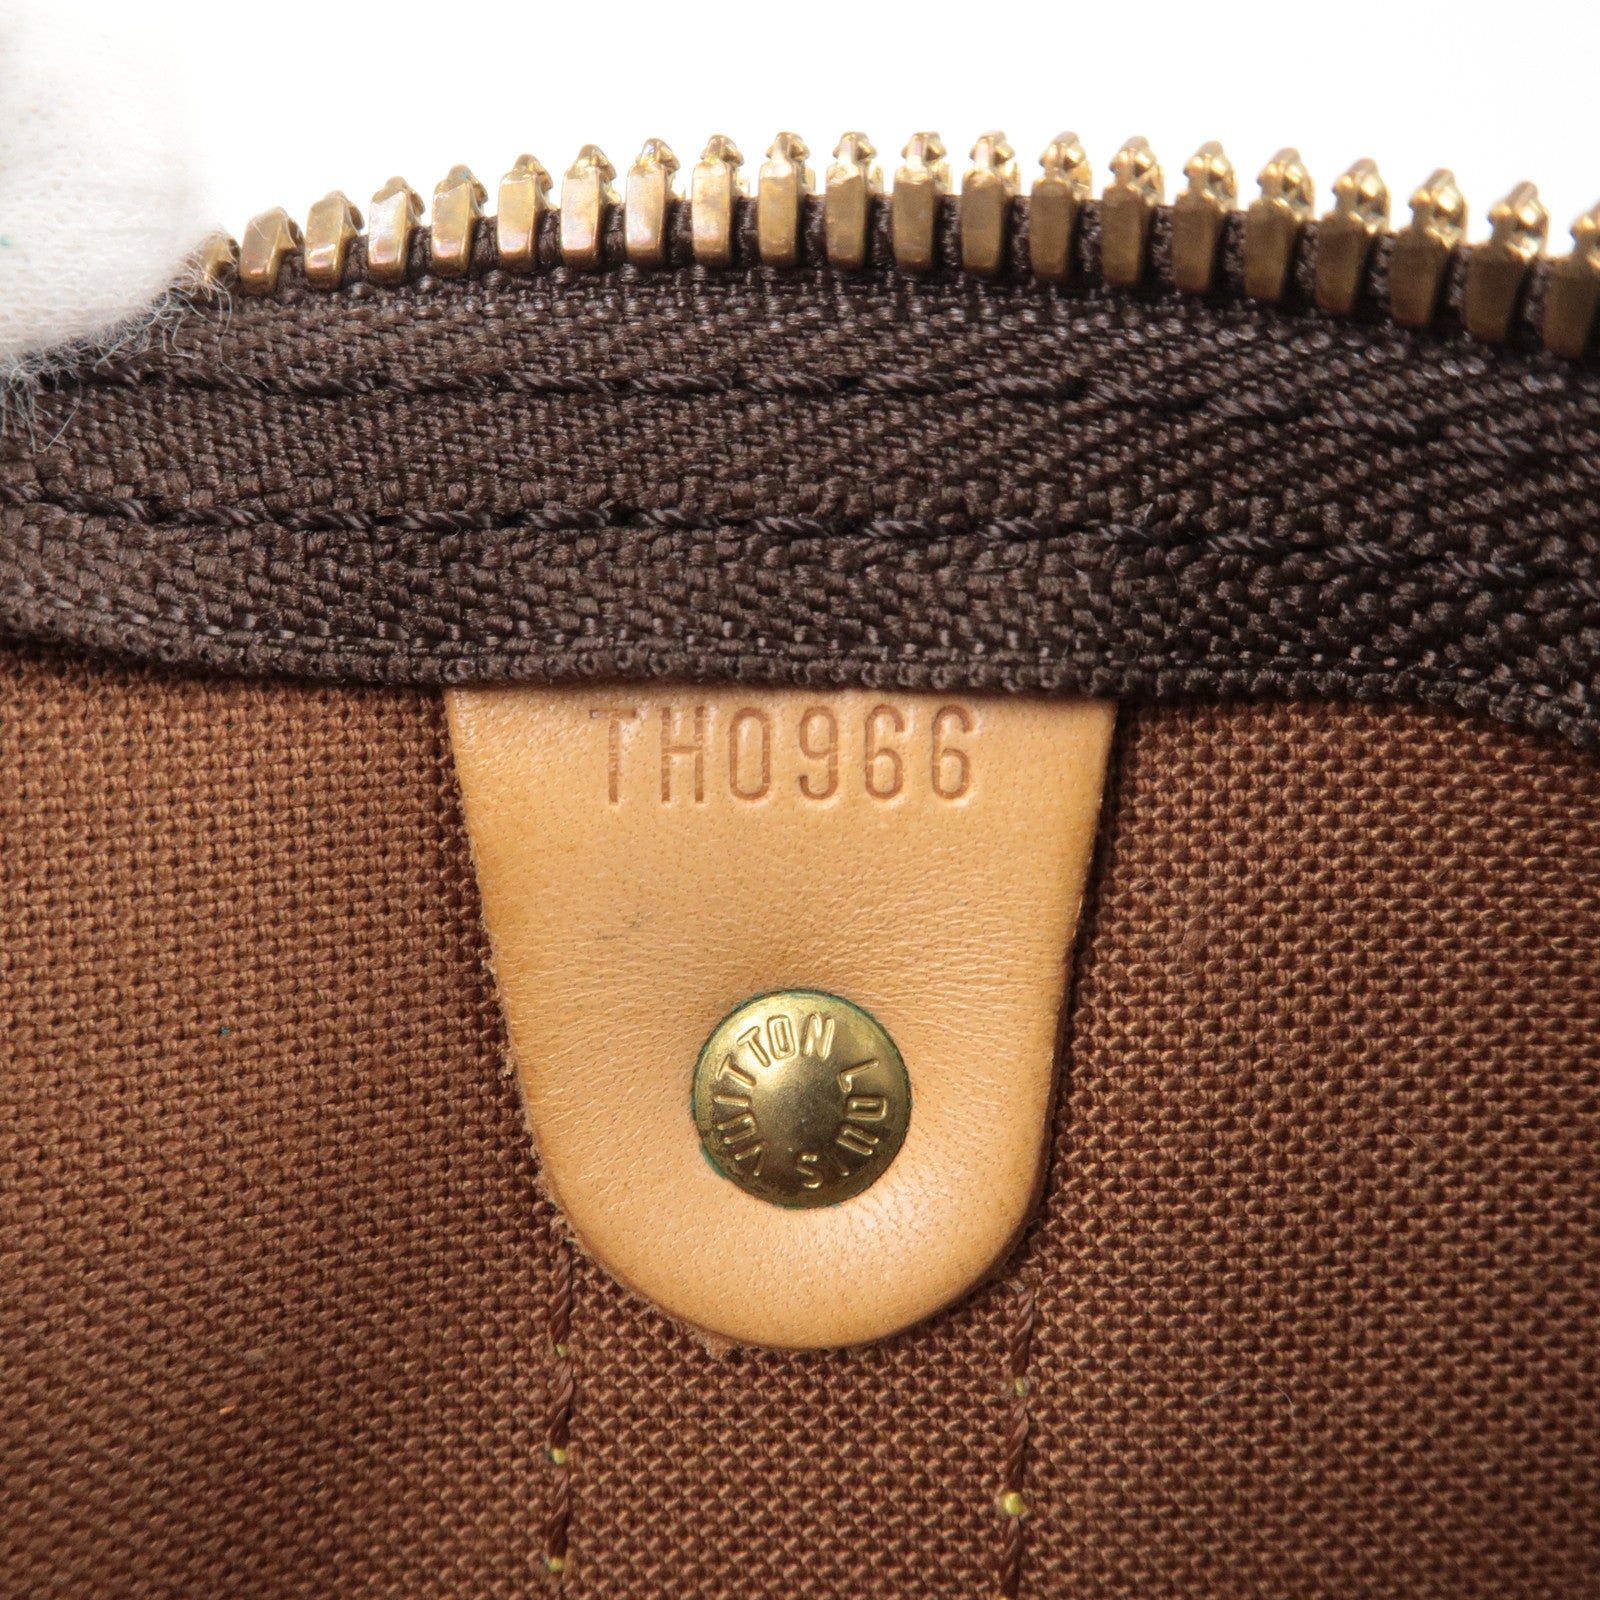 Louis Vuitton M41412 Keepall Bandouliere 60 Monogram Bag Used Duffle Boston  JP